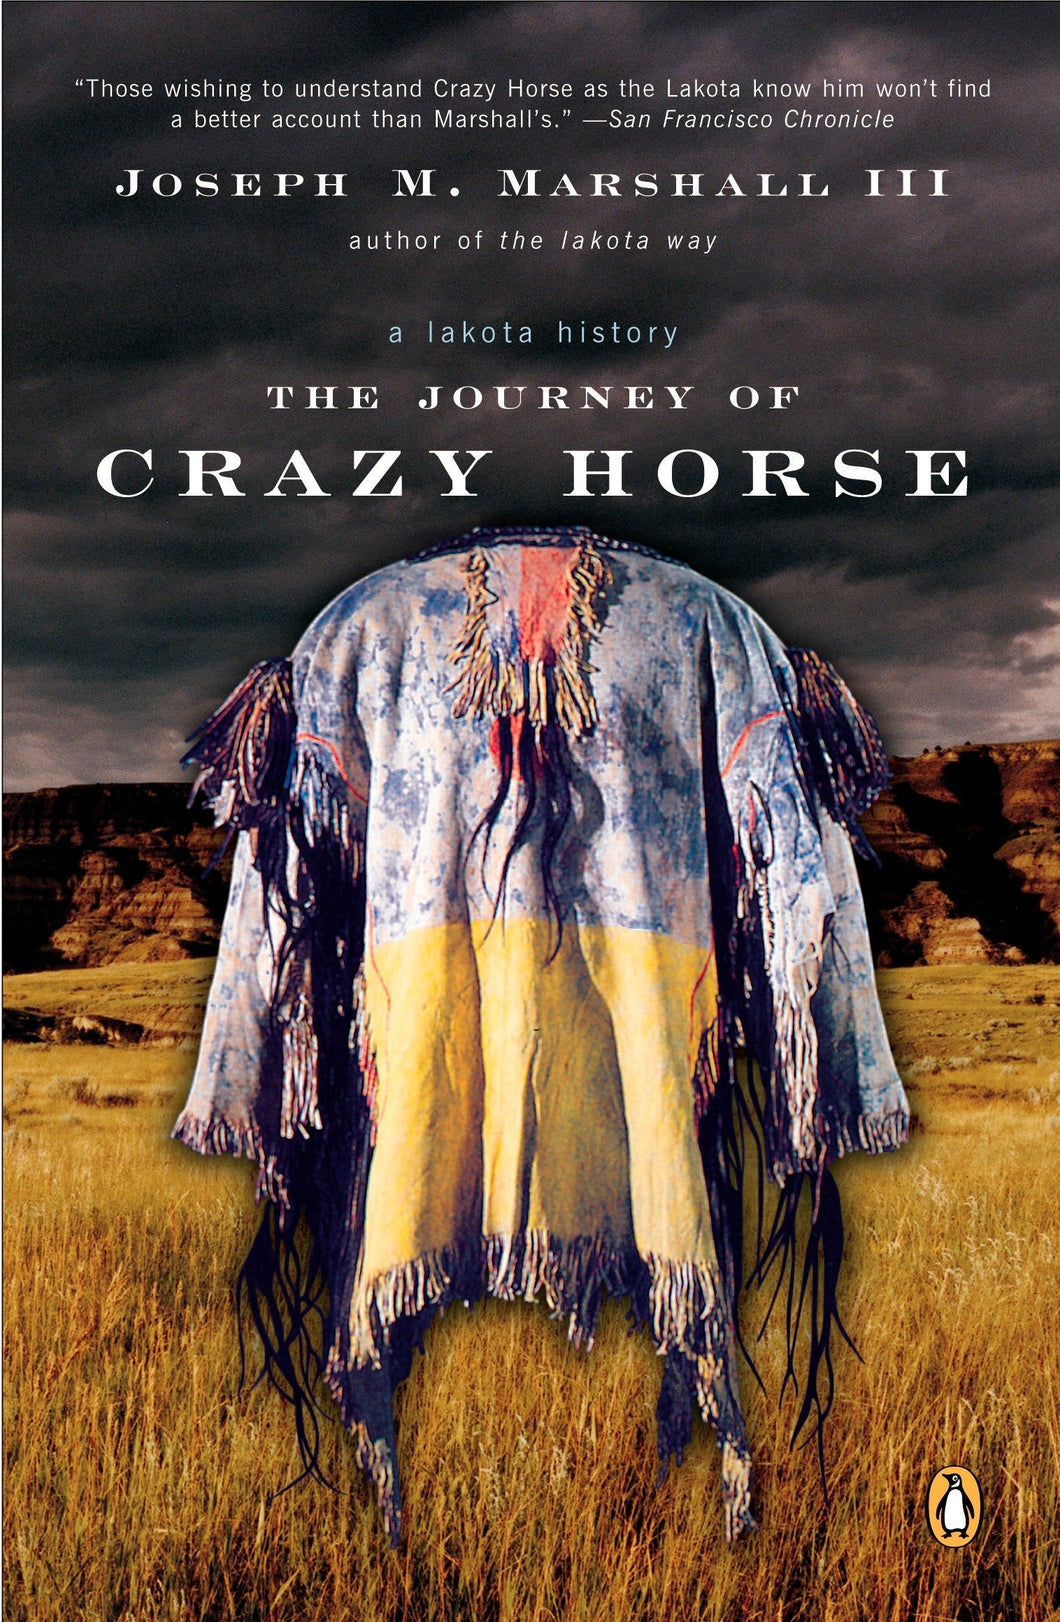 The Journey of Crazy Horse: A Lakota History [Joseph M. Marshall III]